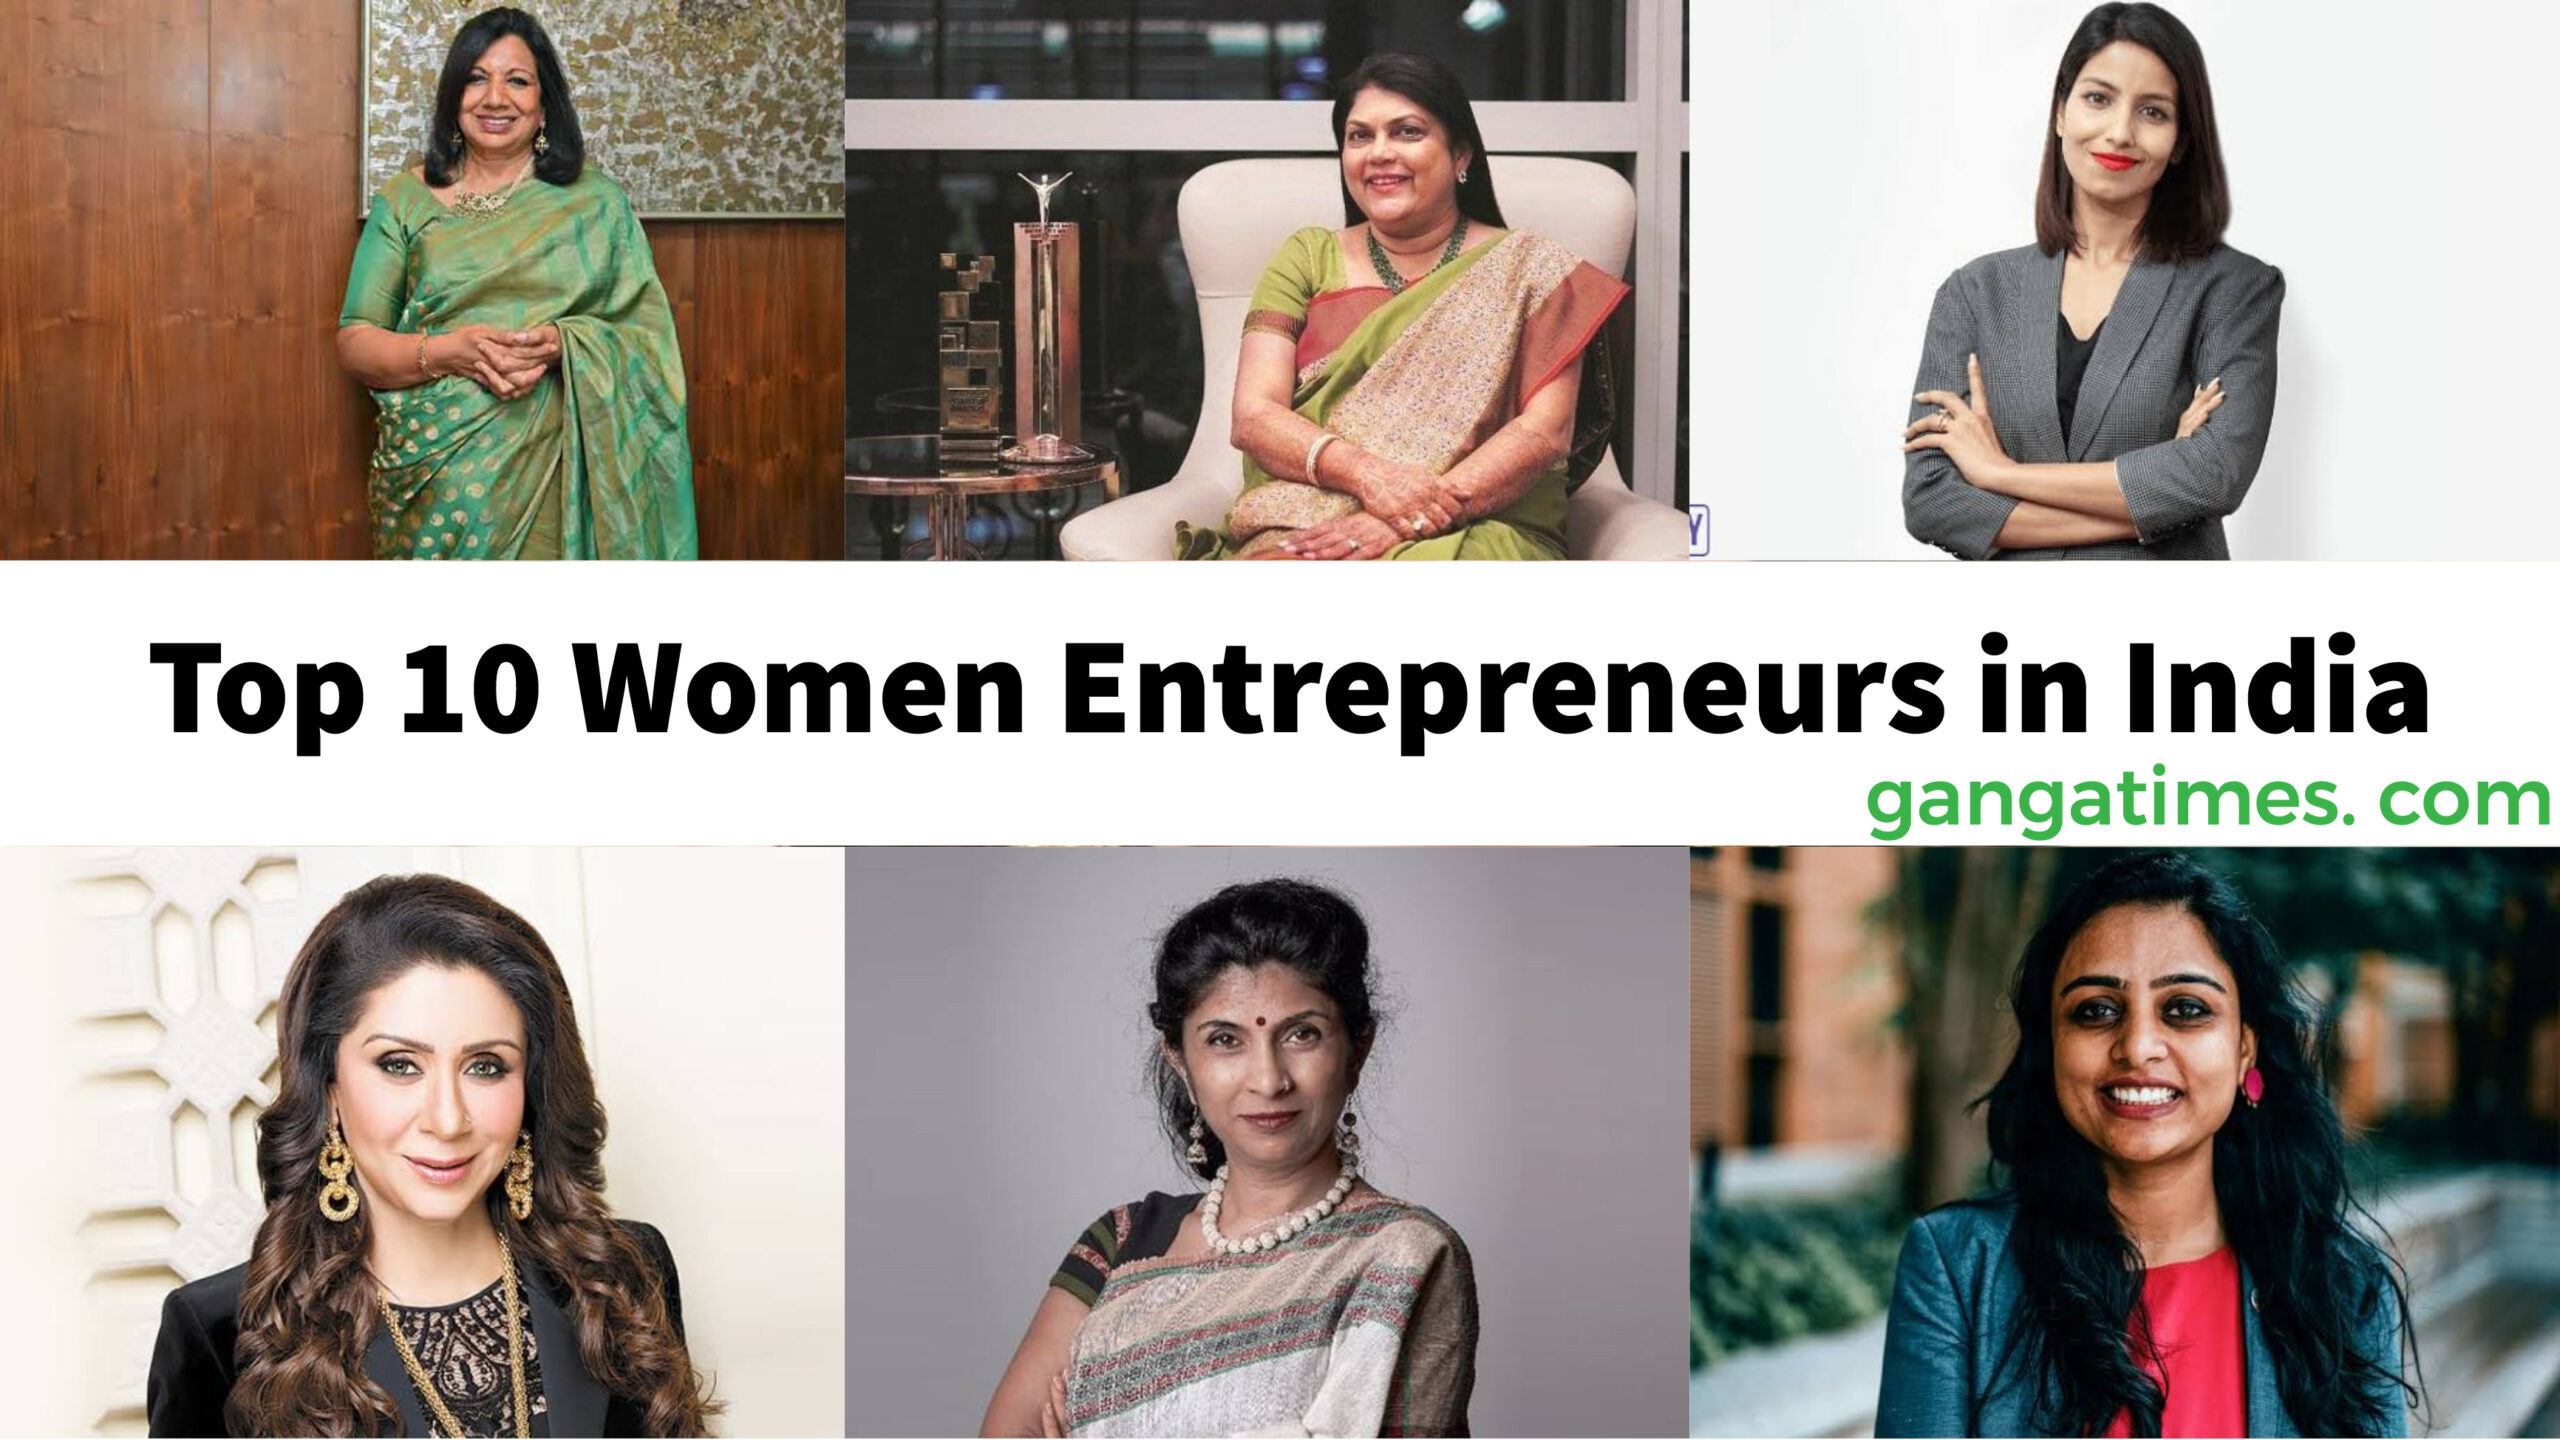 Top 10 Most Successful Women Entrepreneurs in India